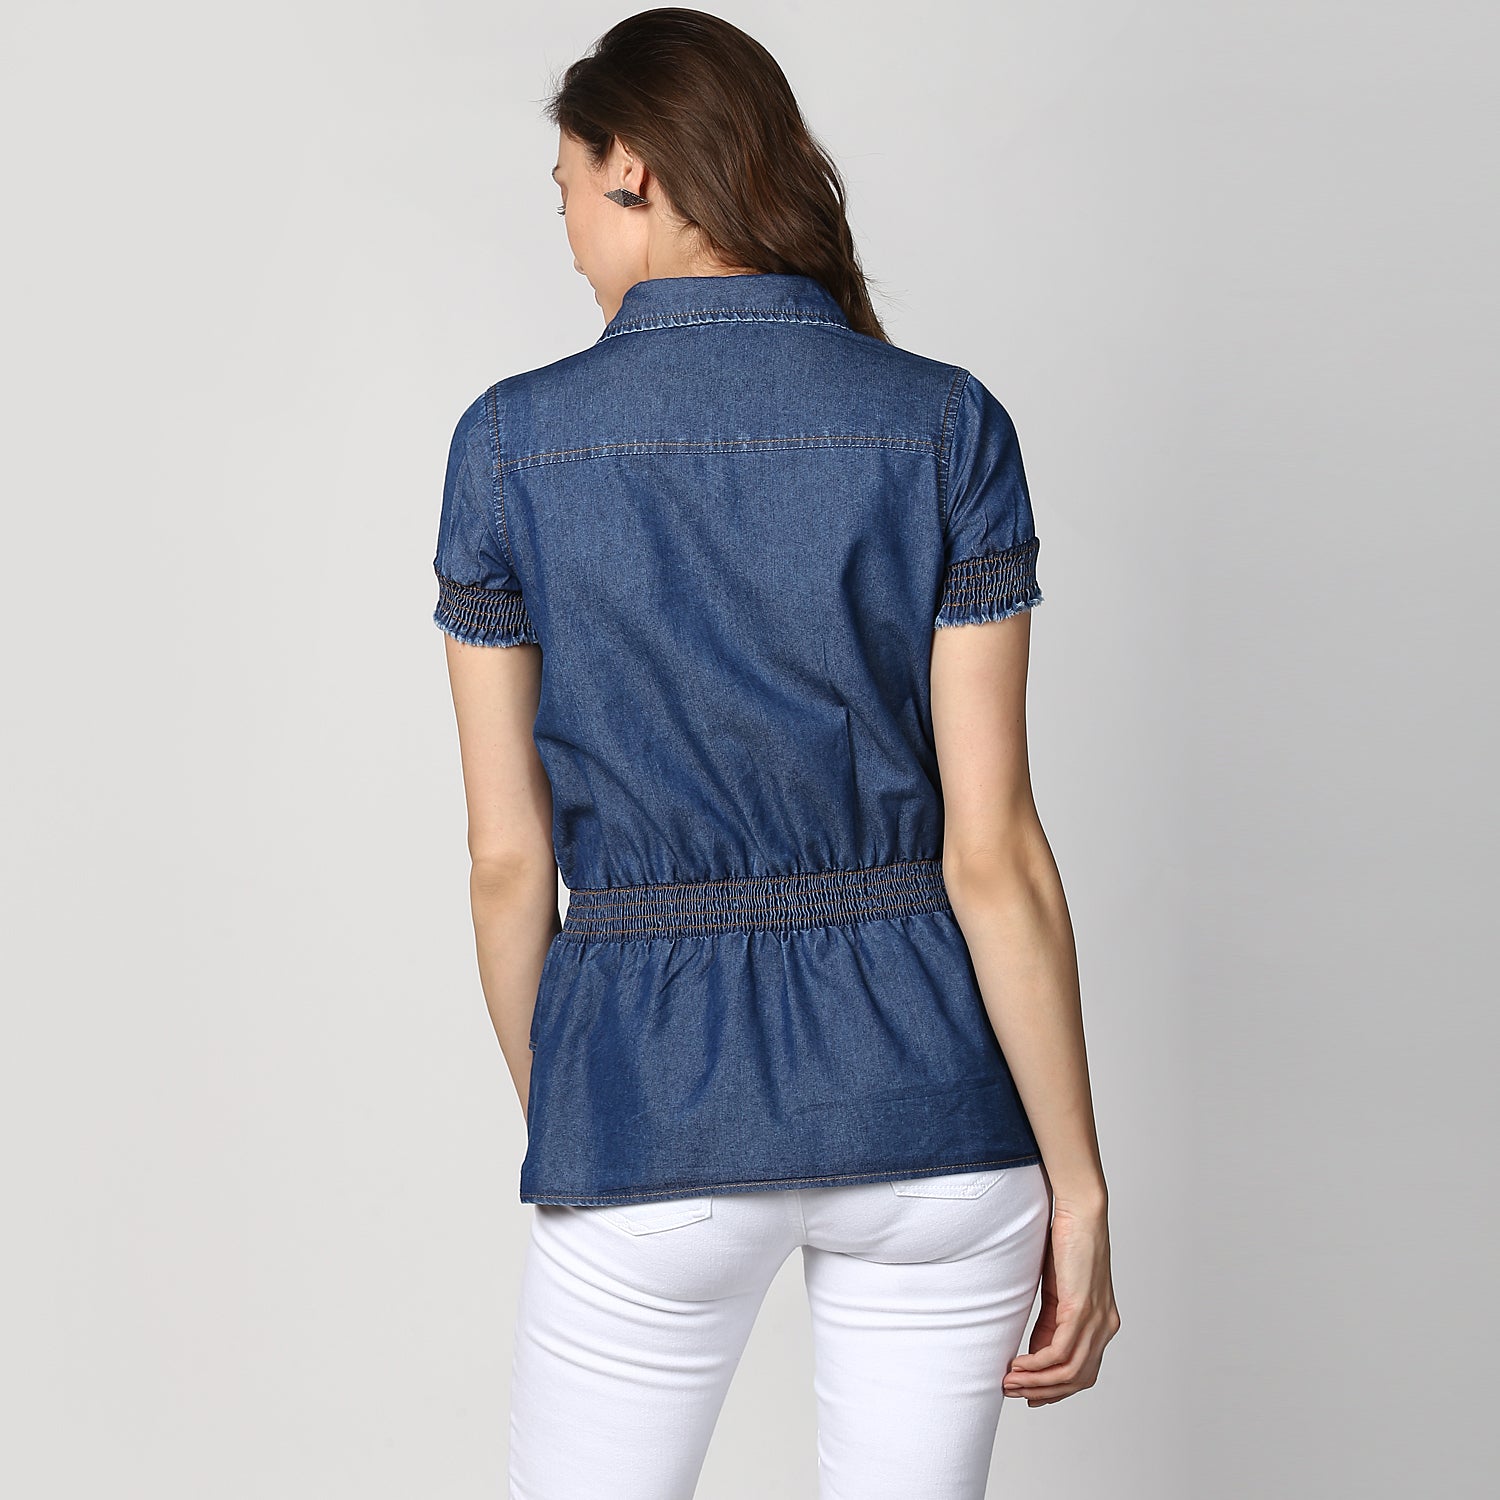 Women's Navy Blue Denim Peplum Top cum Shirt with elasticated waistband - StyleStone